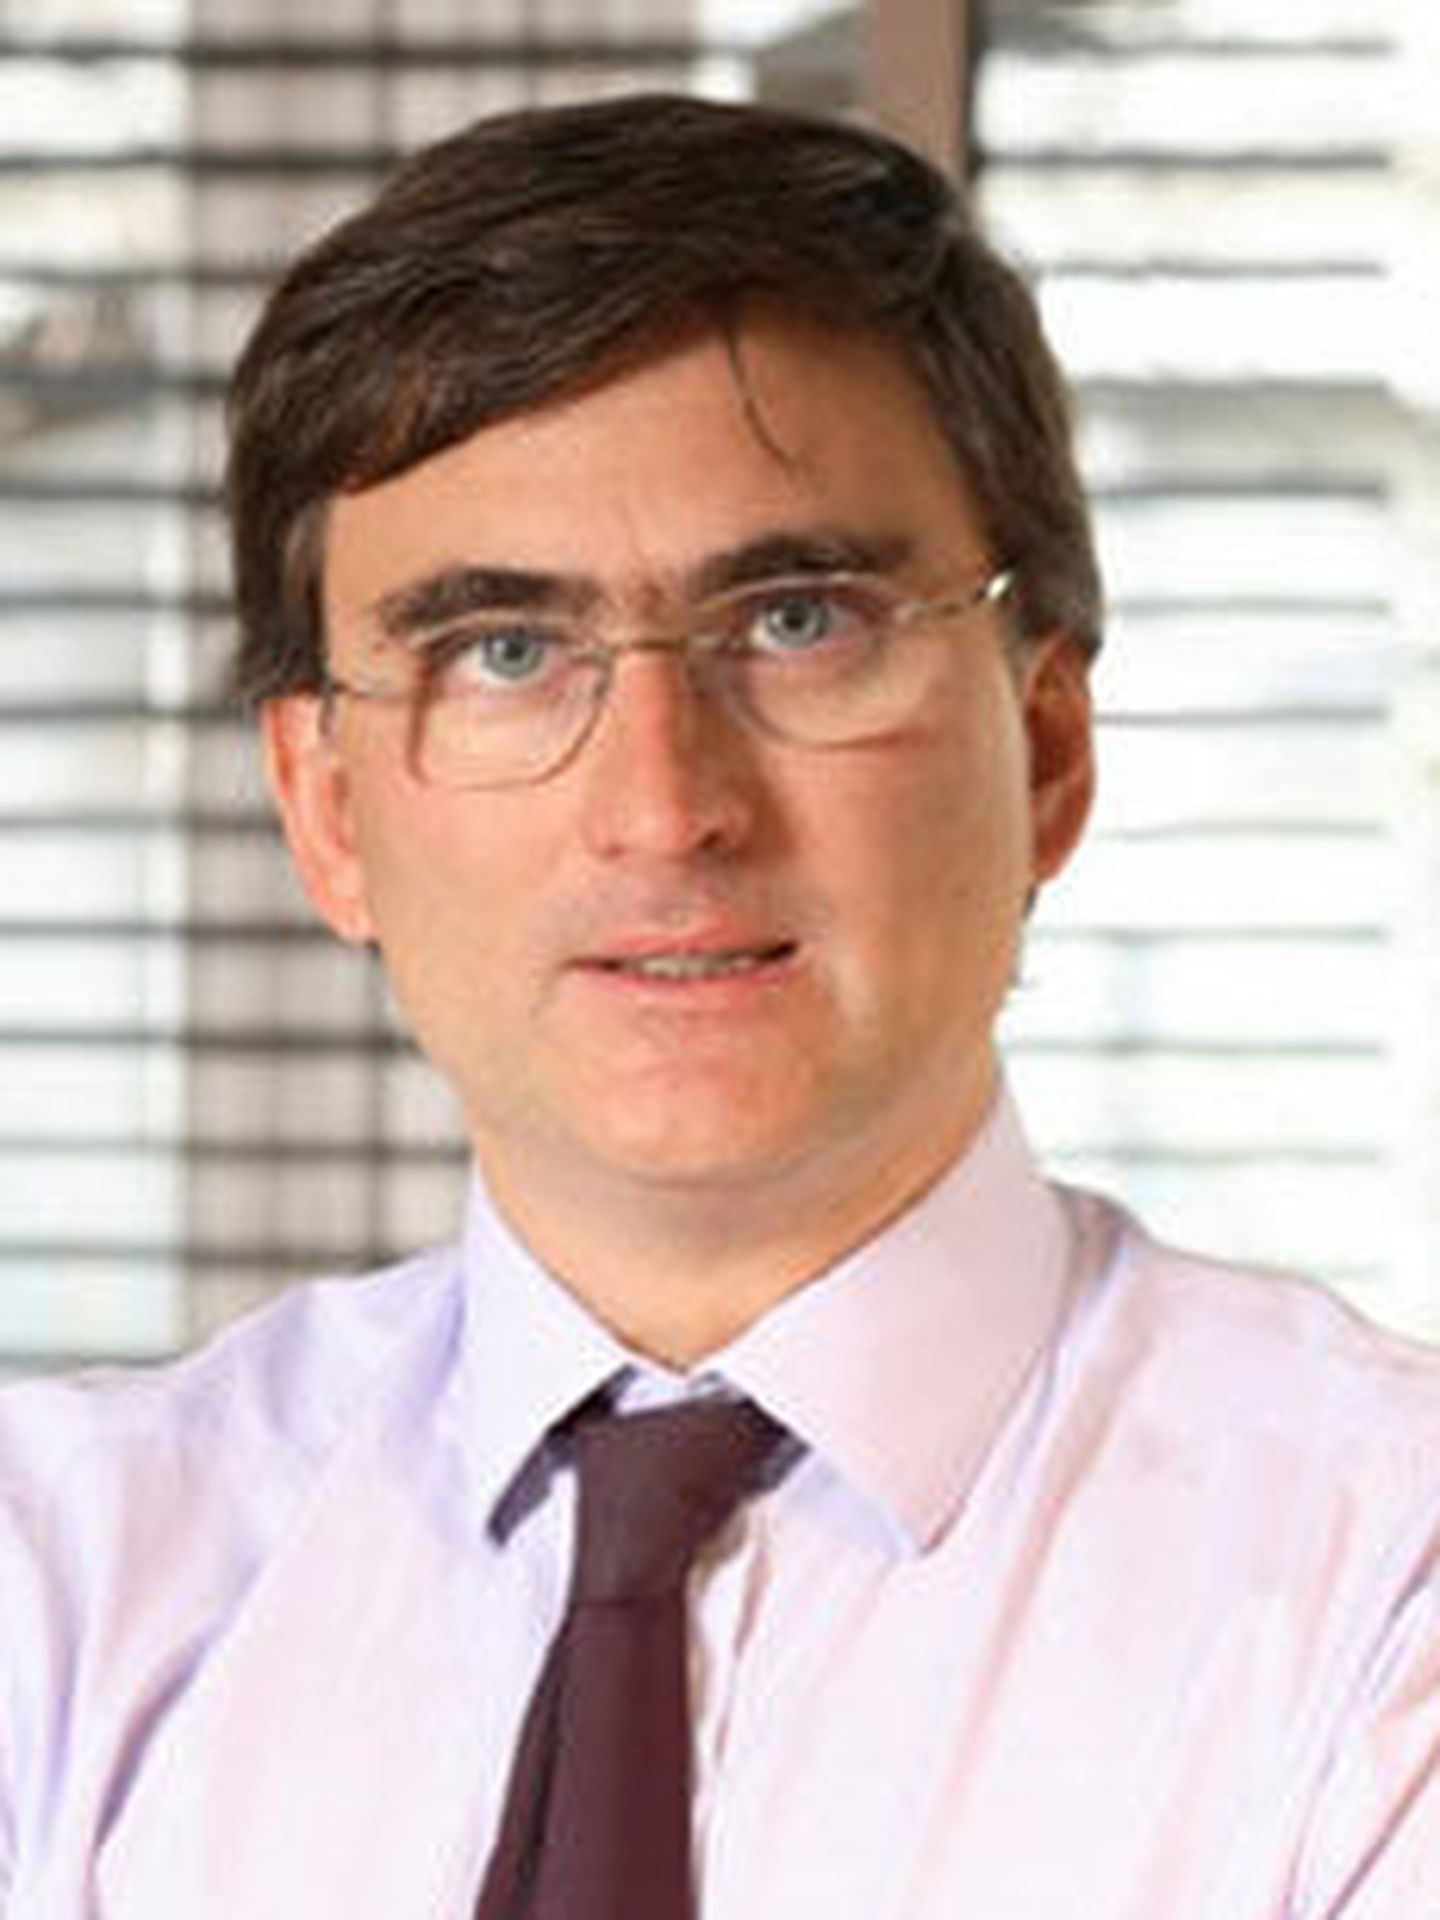 Francisco García Paramés, director de inversiones de Bestinver